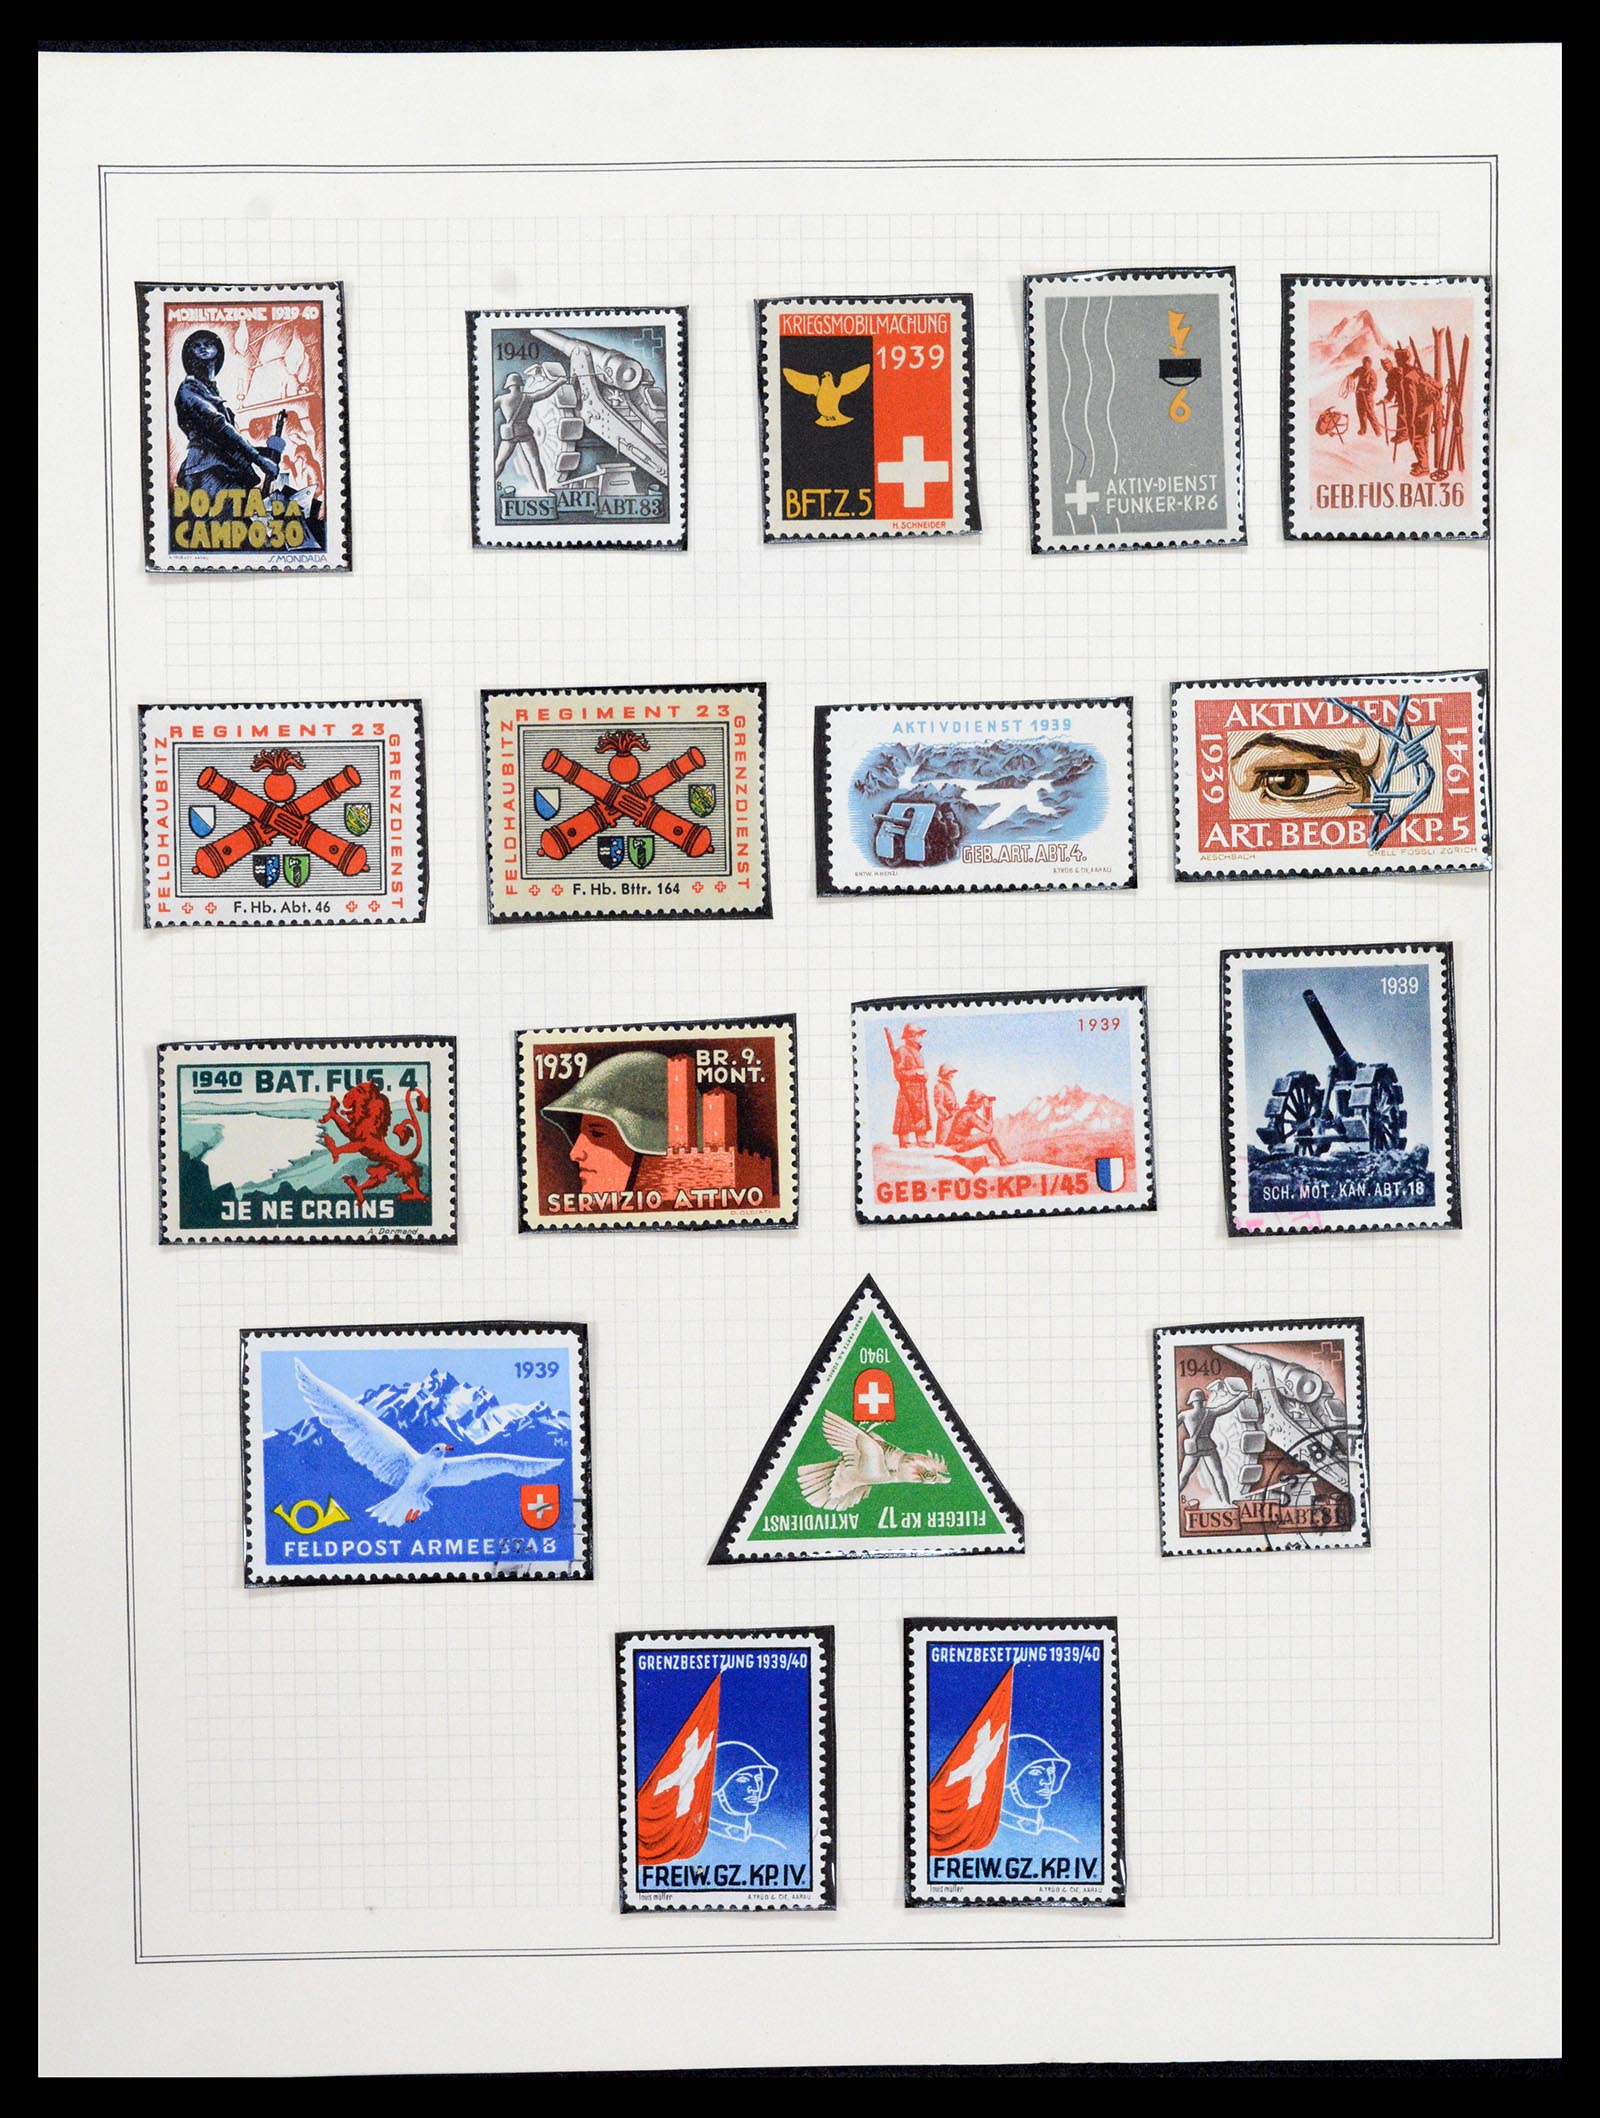 37642 055 - Stamp collection 37642 Switzerland soldier stamps 1914-1945.